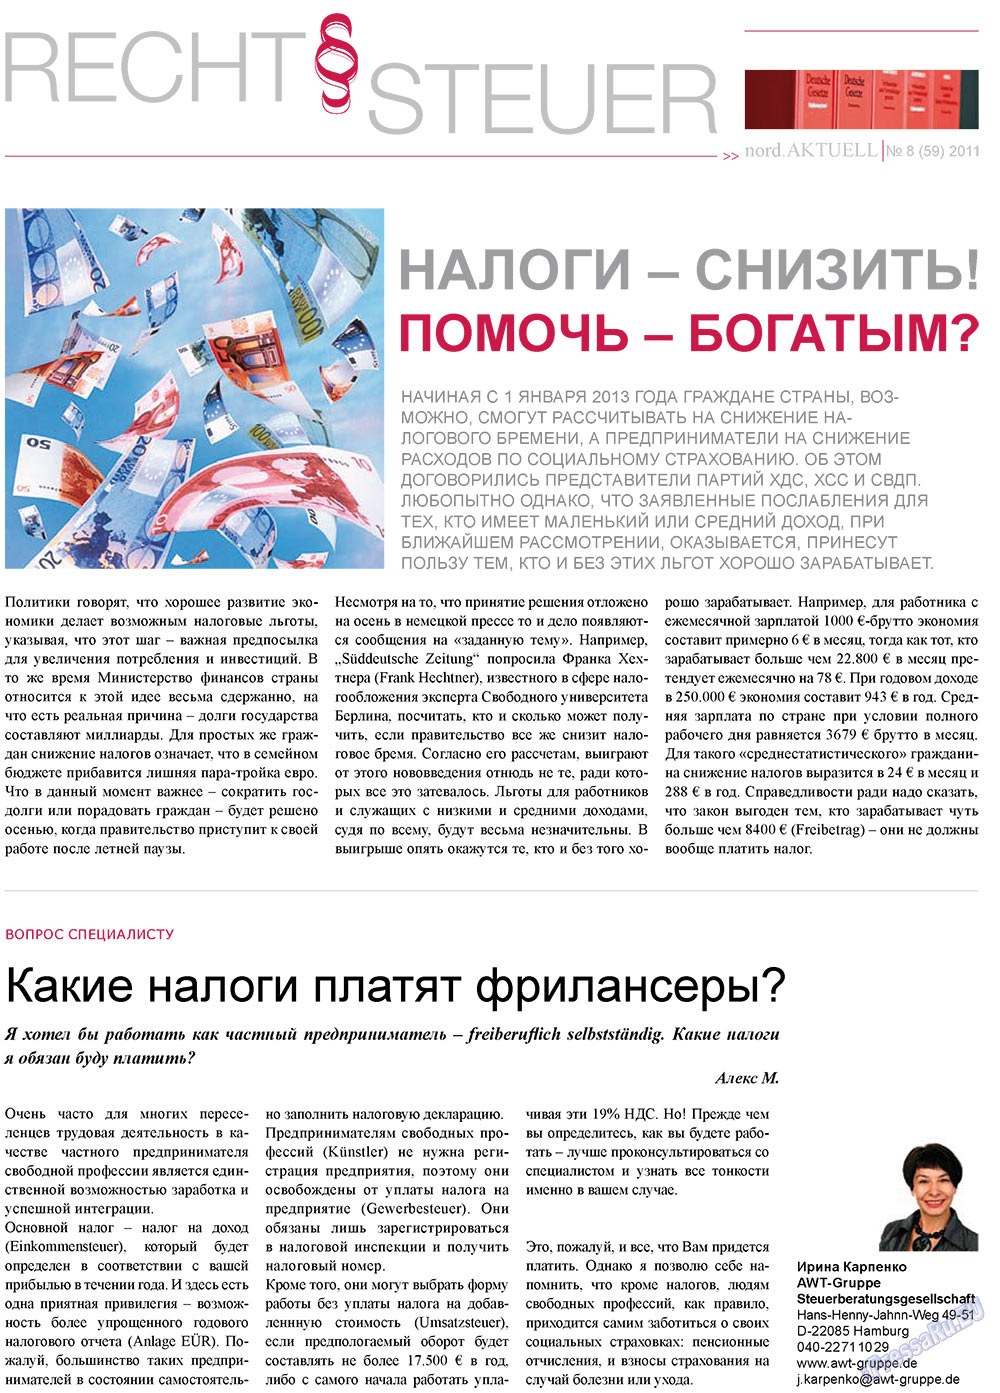 nord.Aktuell, газета. 2011 №8 стр.9